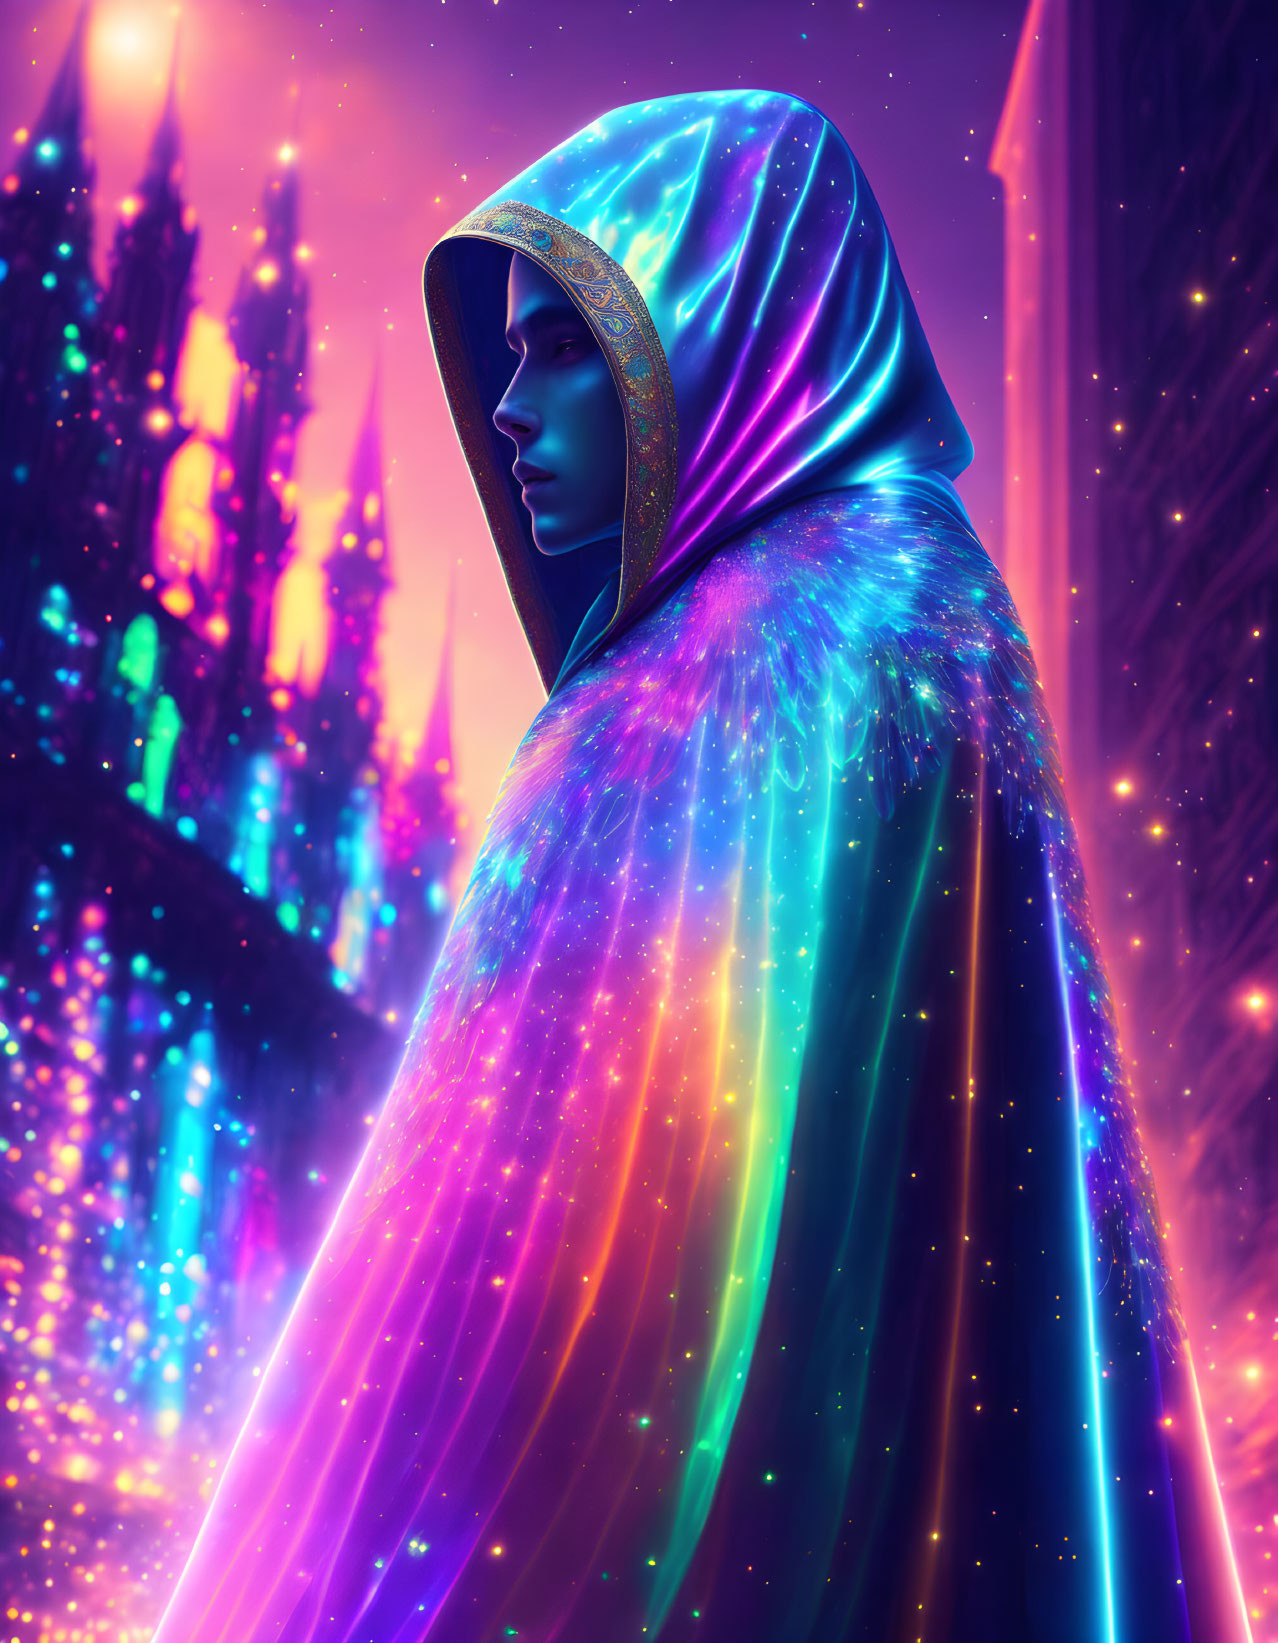 Vibrant cosmic-patterned cloak against neon-lit cityscape